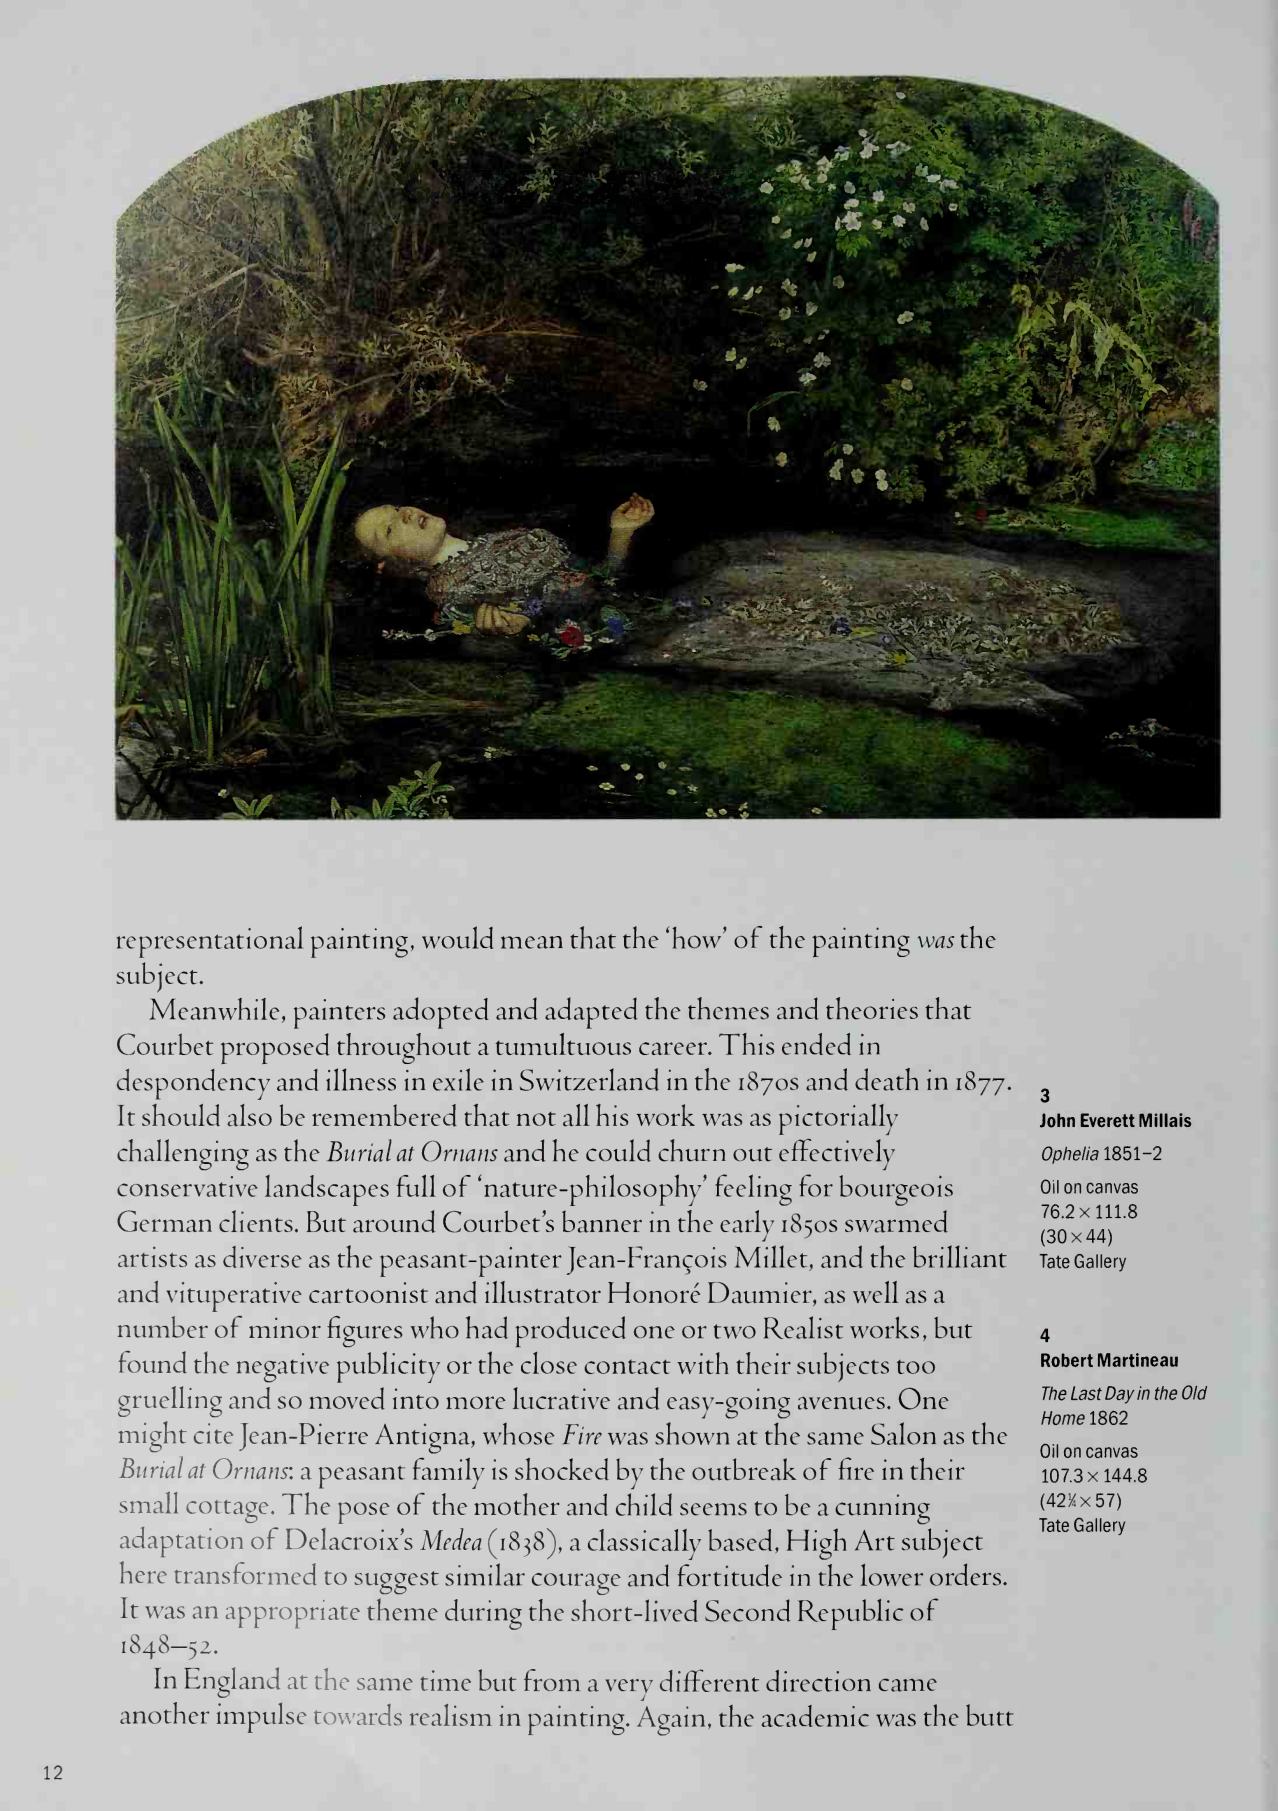 Realism / James Malpas. — London : Tate Gallery Publishing Ltd., 1997. — 80 p., ill. — (Movements in Modern Art)